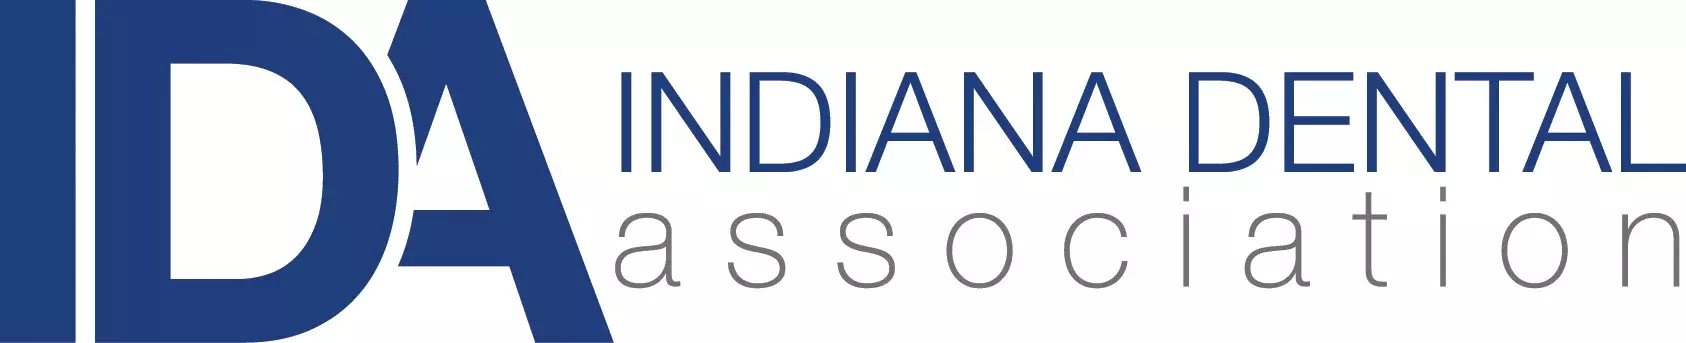 Indiana Dental Association logo